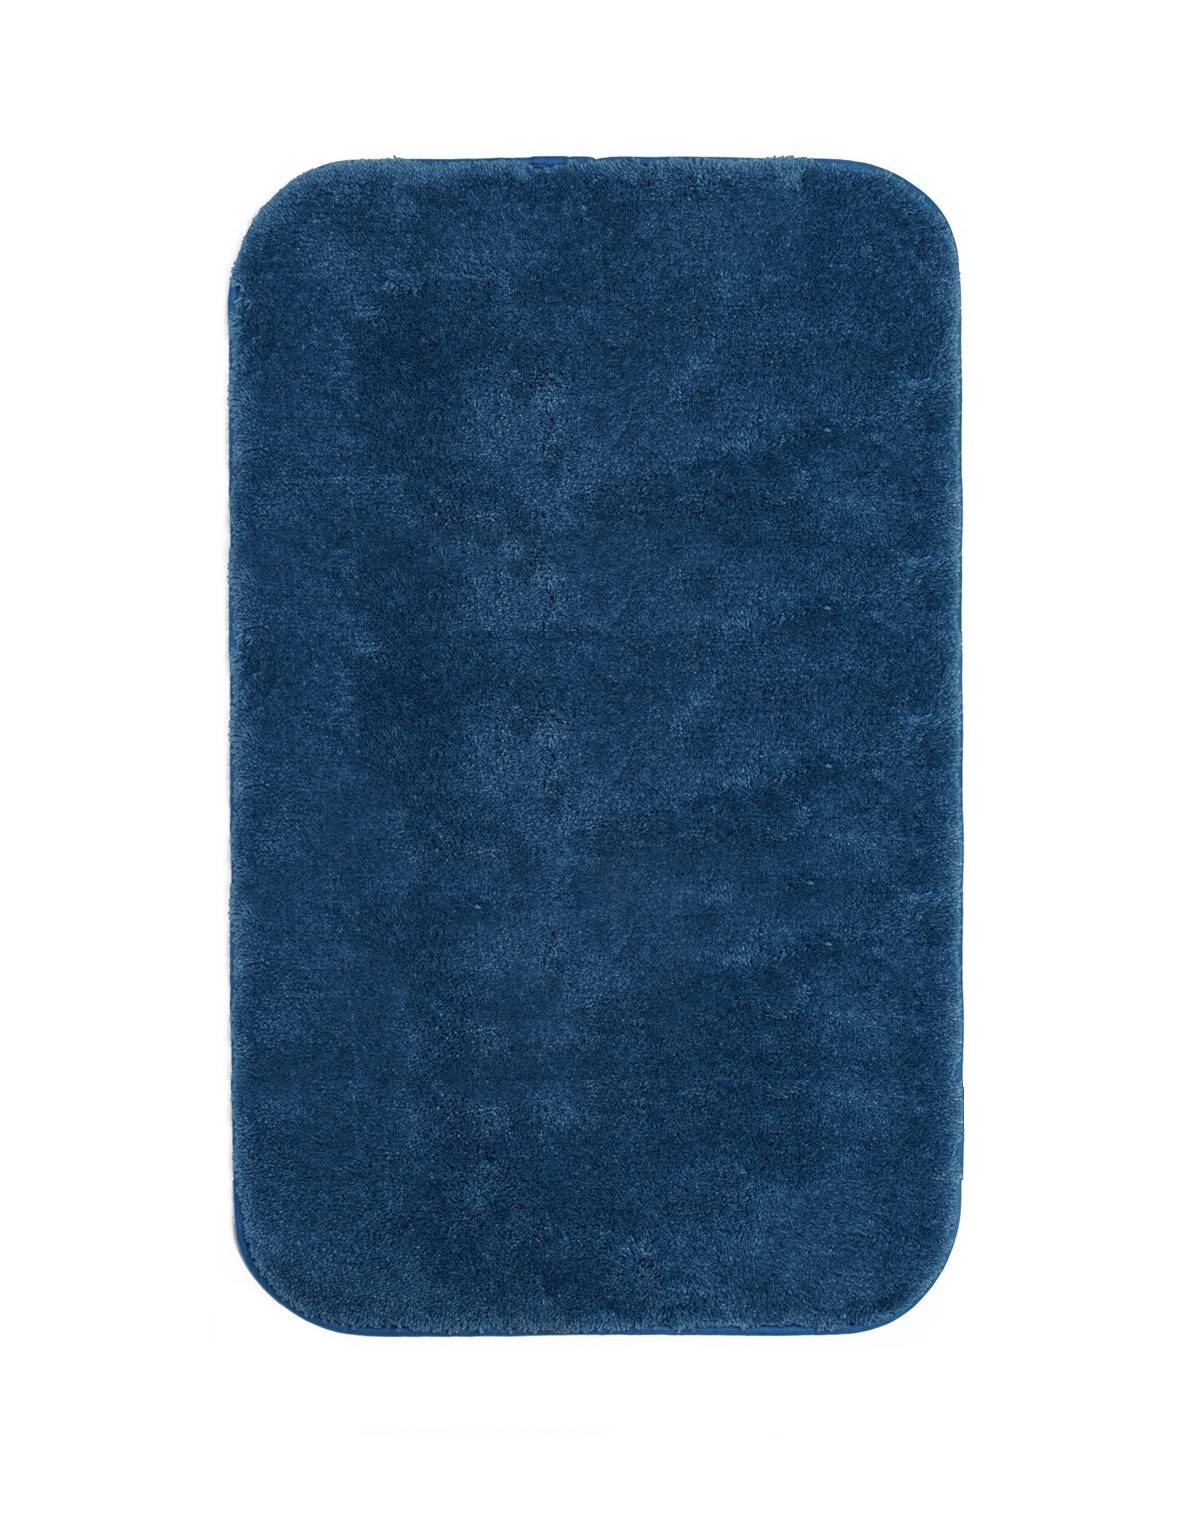 Tapis de bain Idoneus 133x190cm Bleu foncé